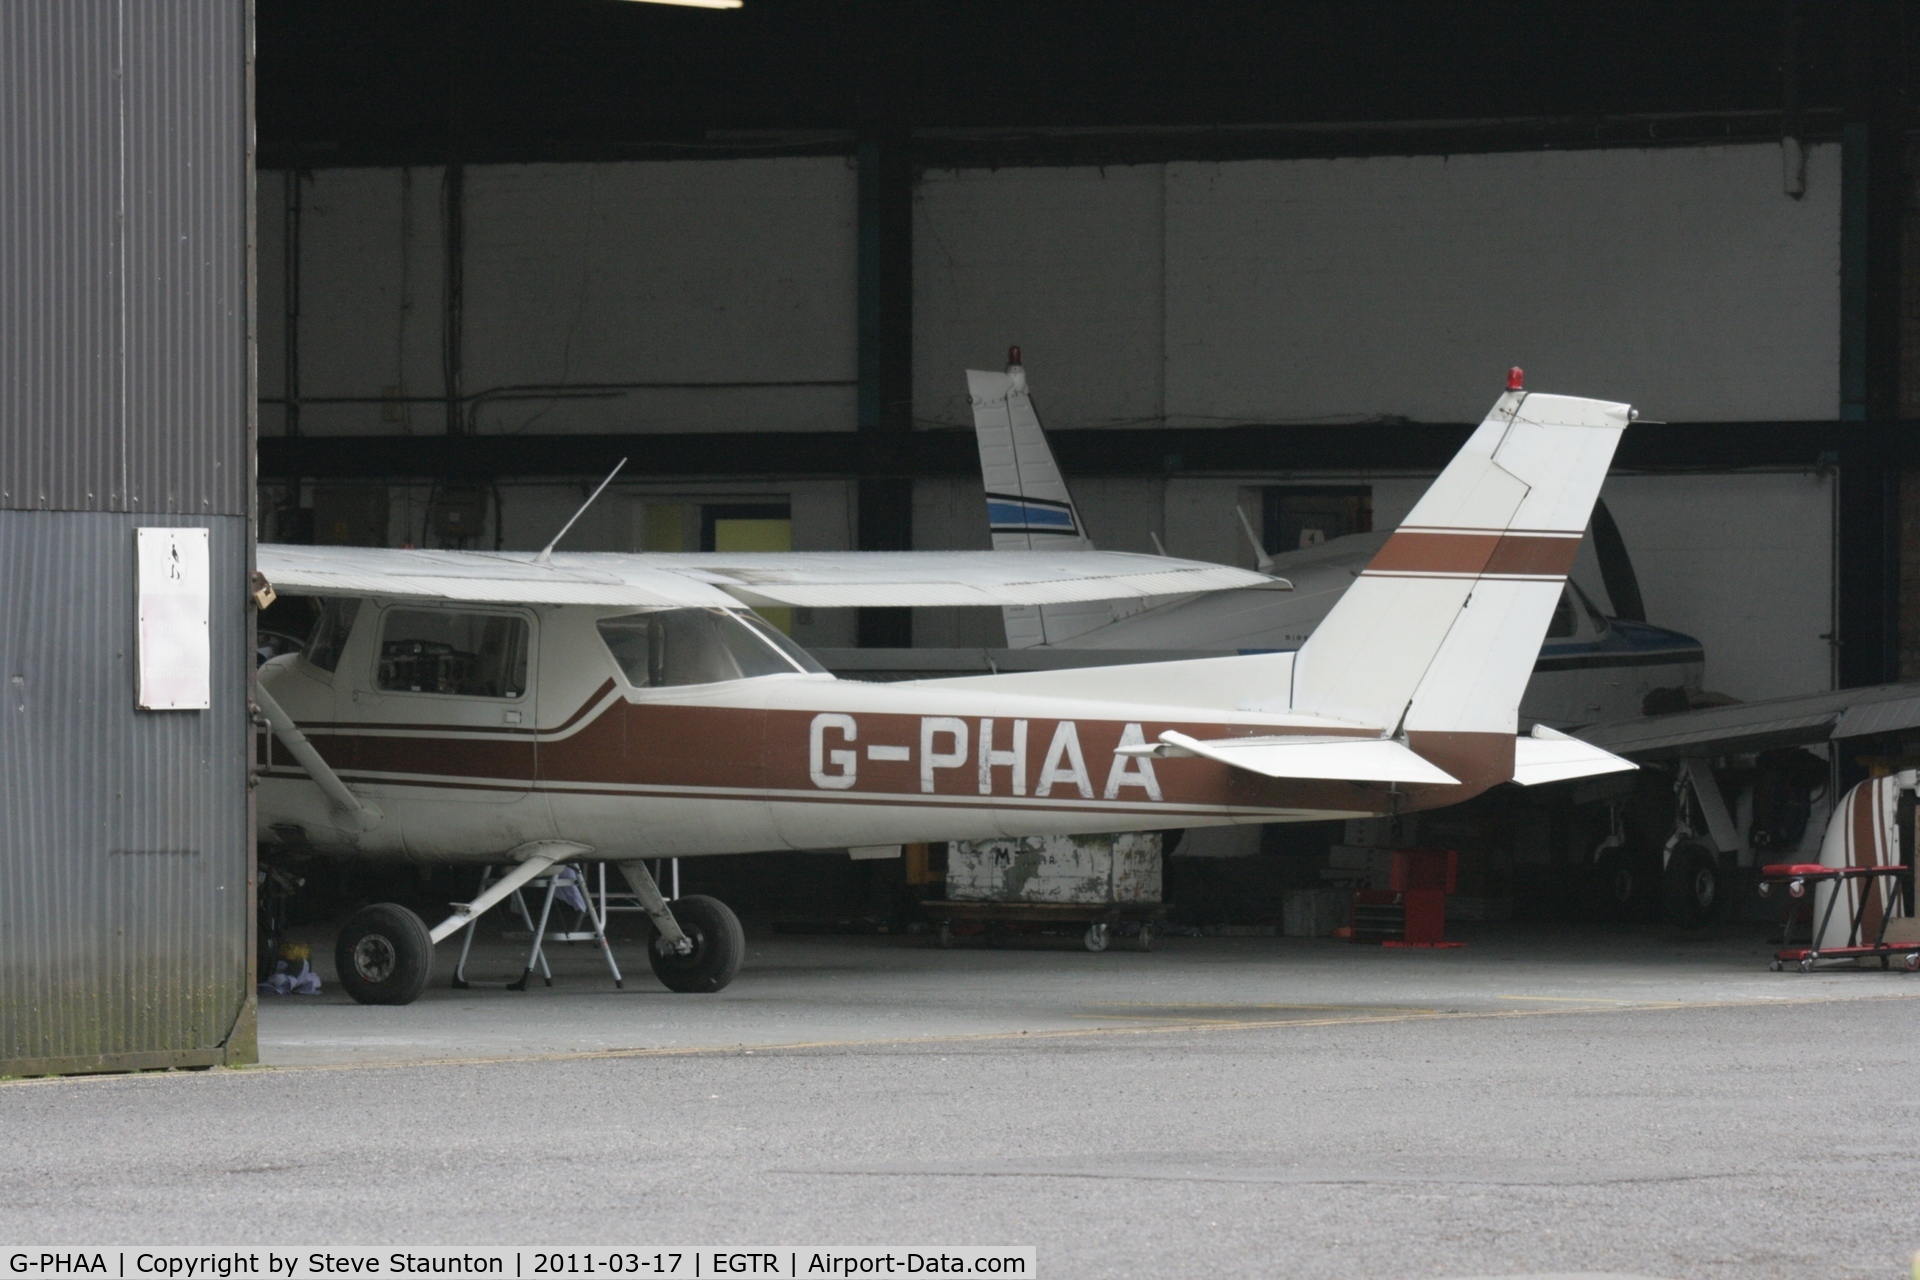 G-PHAA, 1974 Reims F150M C/N 1159, Taken at Elstree Airfield March 2011